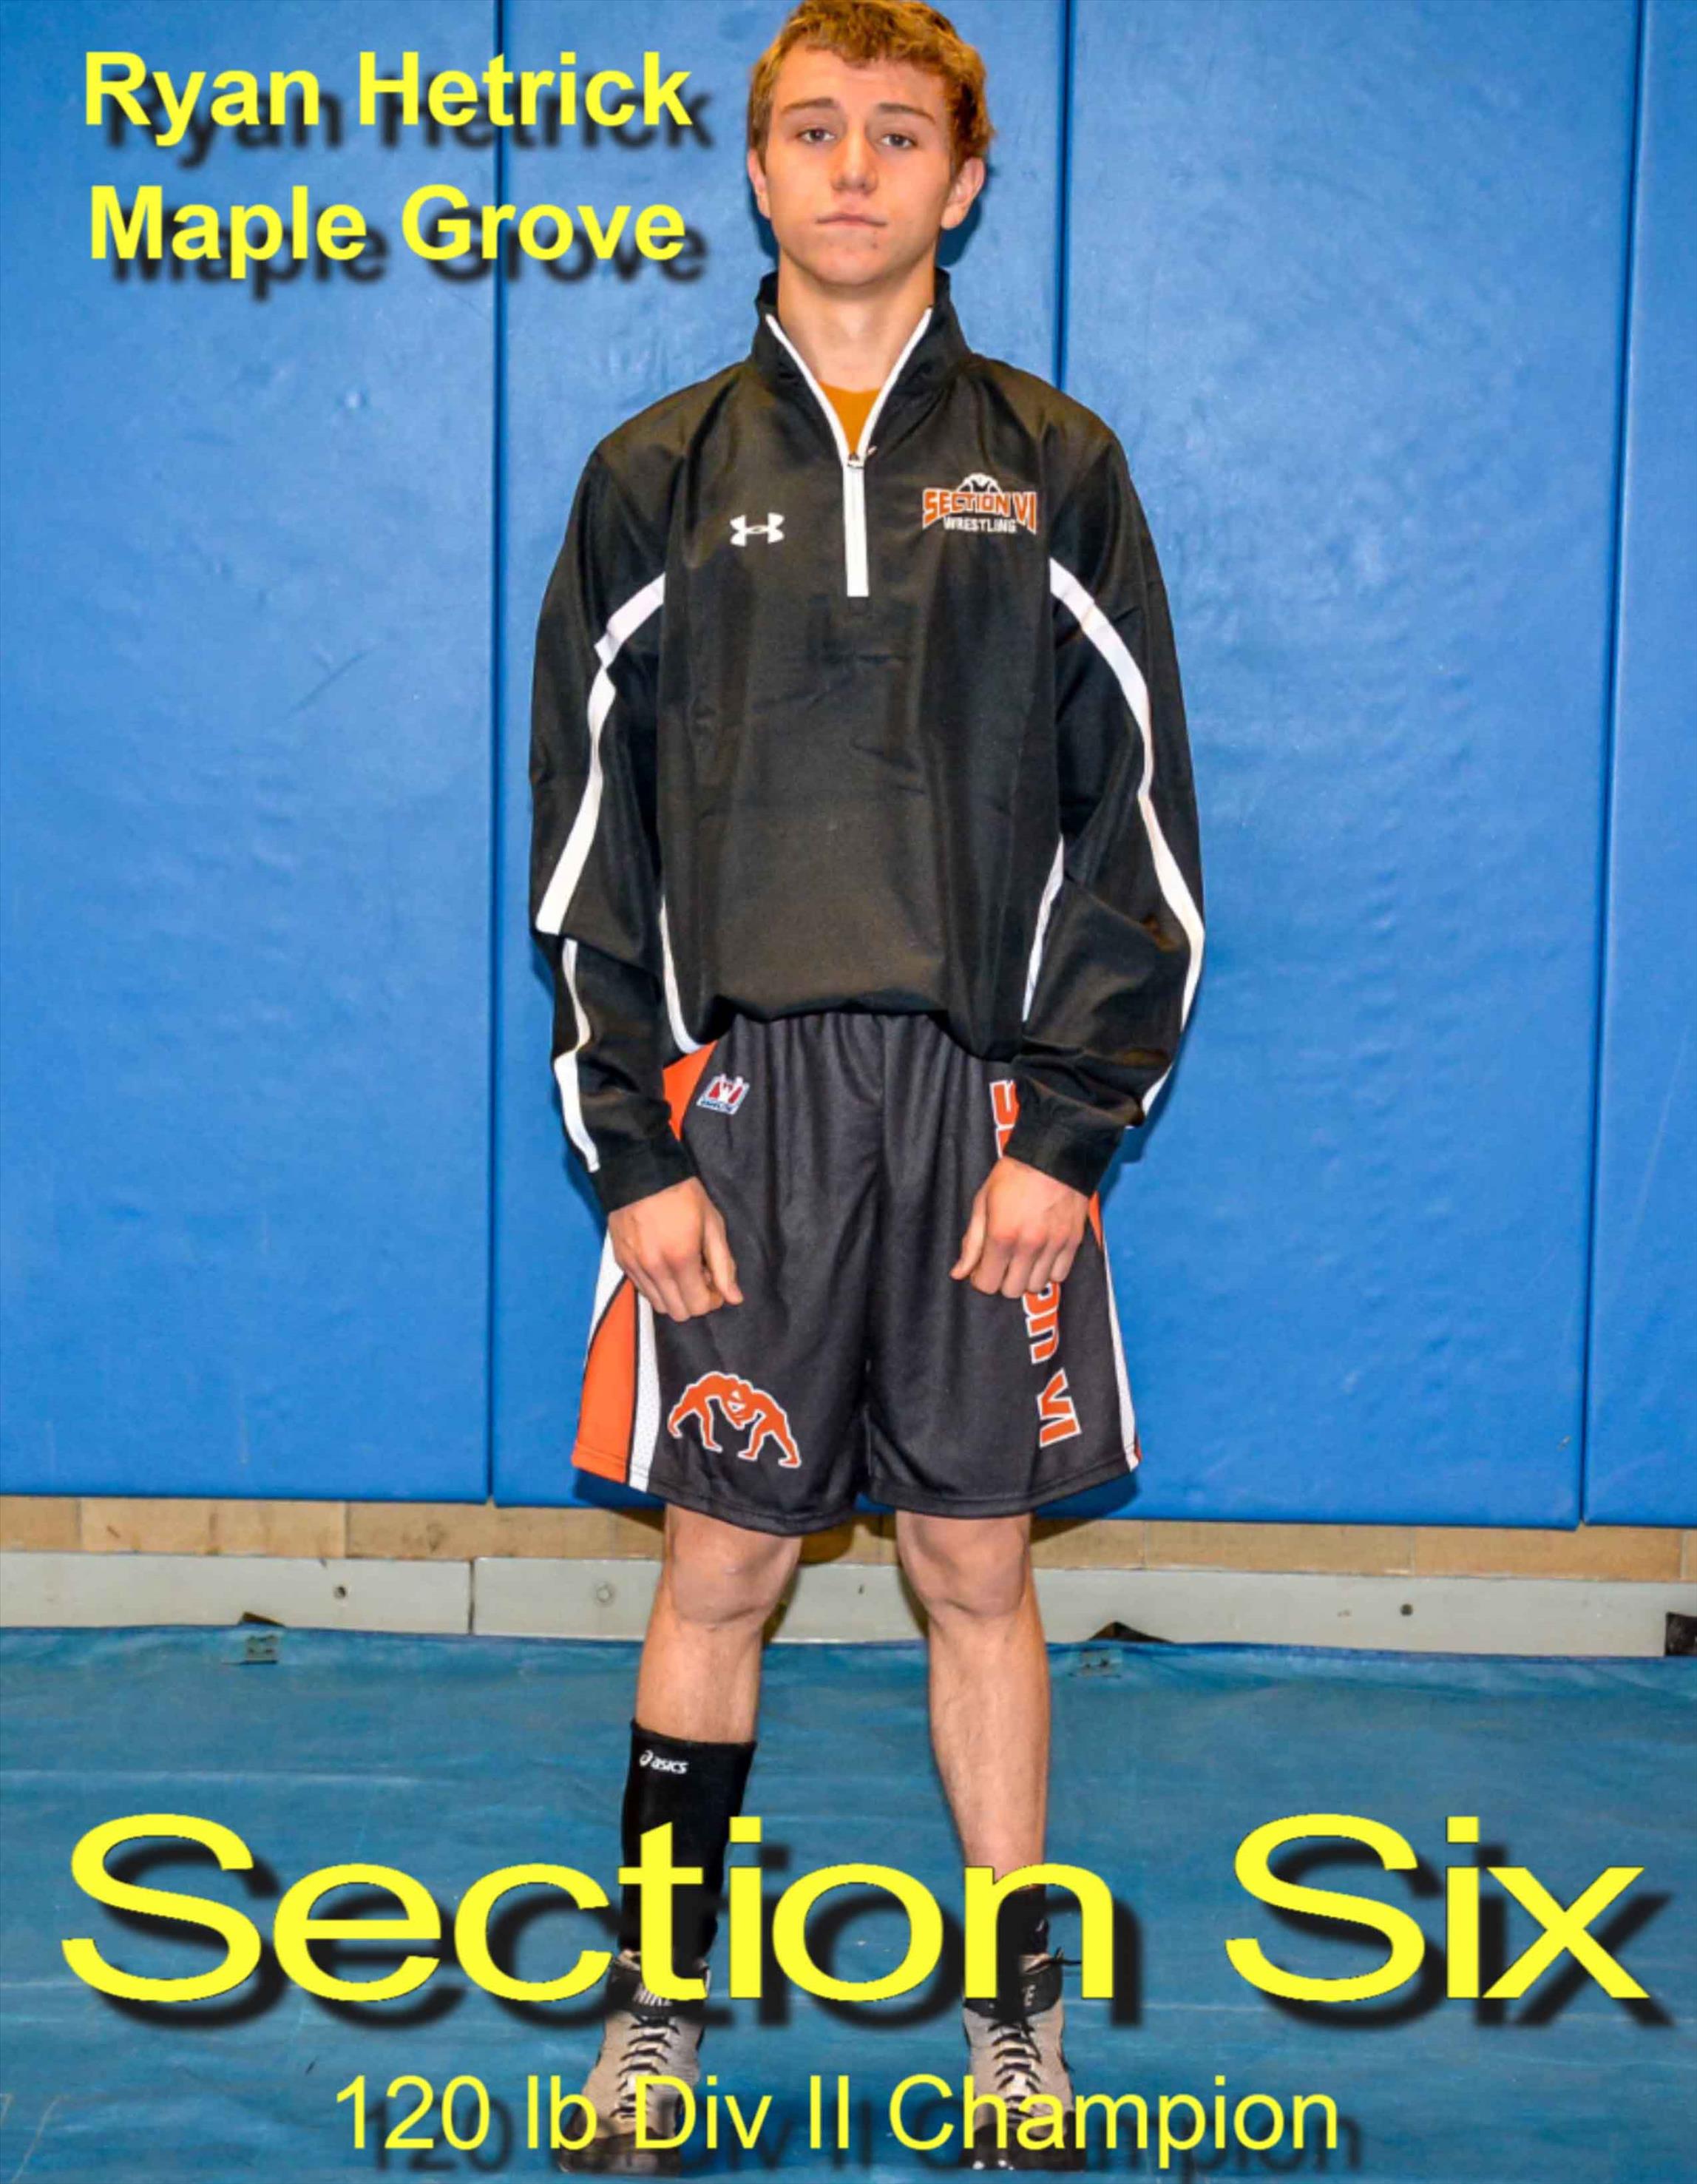 Ryan Hetrick Maple Grove 120 lb Div II Champion